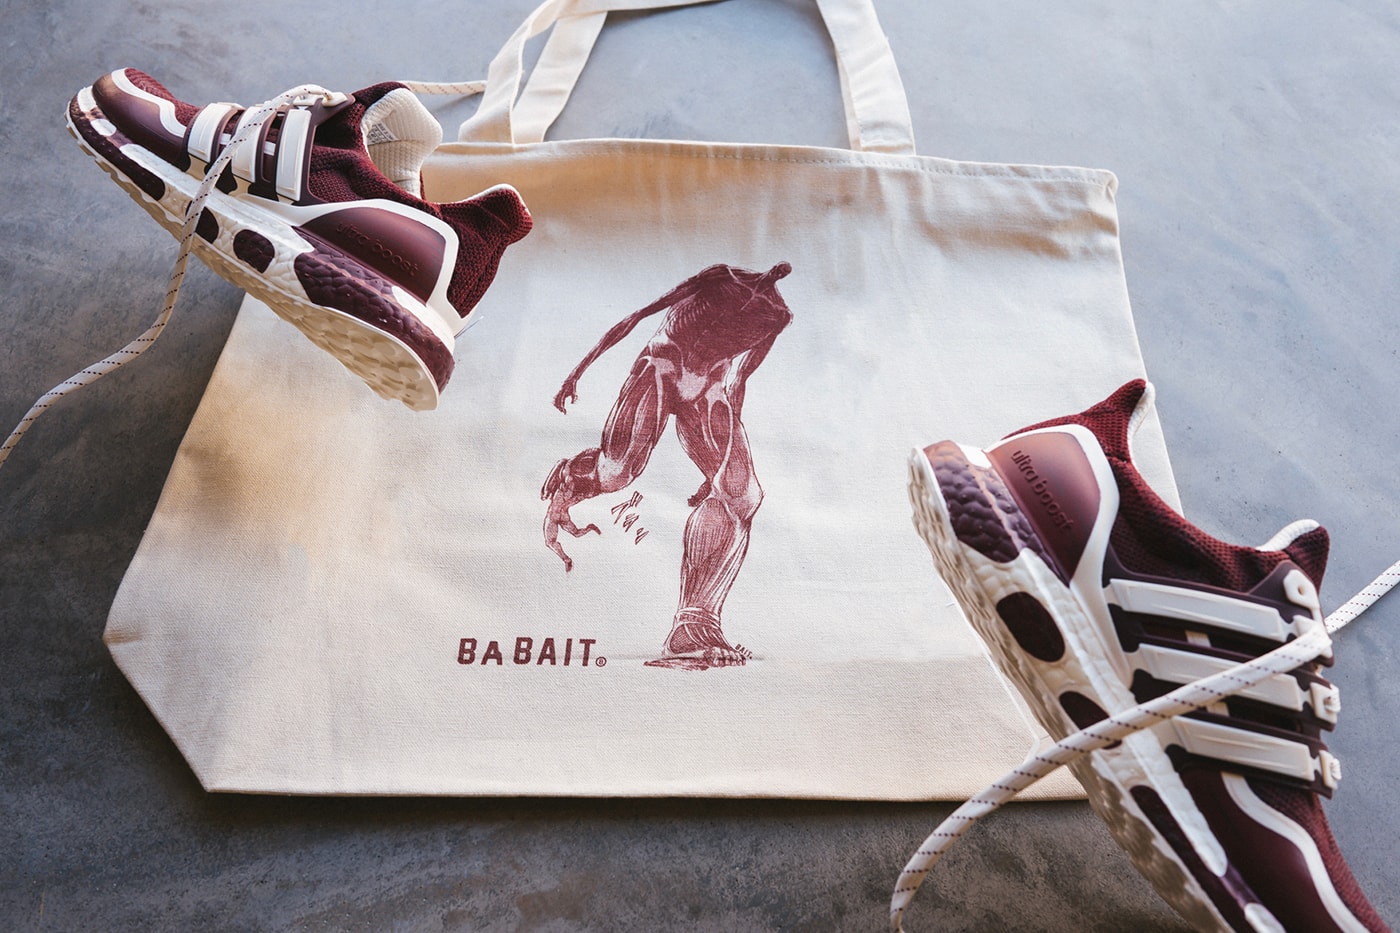 BAIT adidas Attack on Titan Collection Release Info UltraBOOST Date Buy Price Kodansha